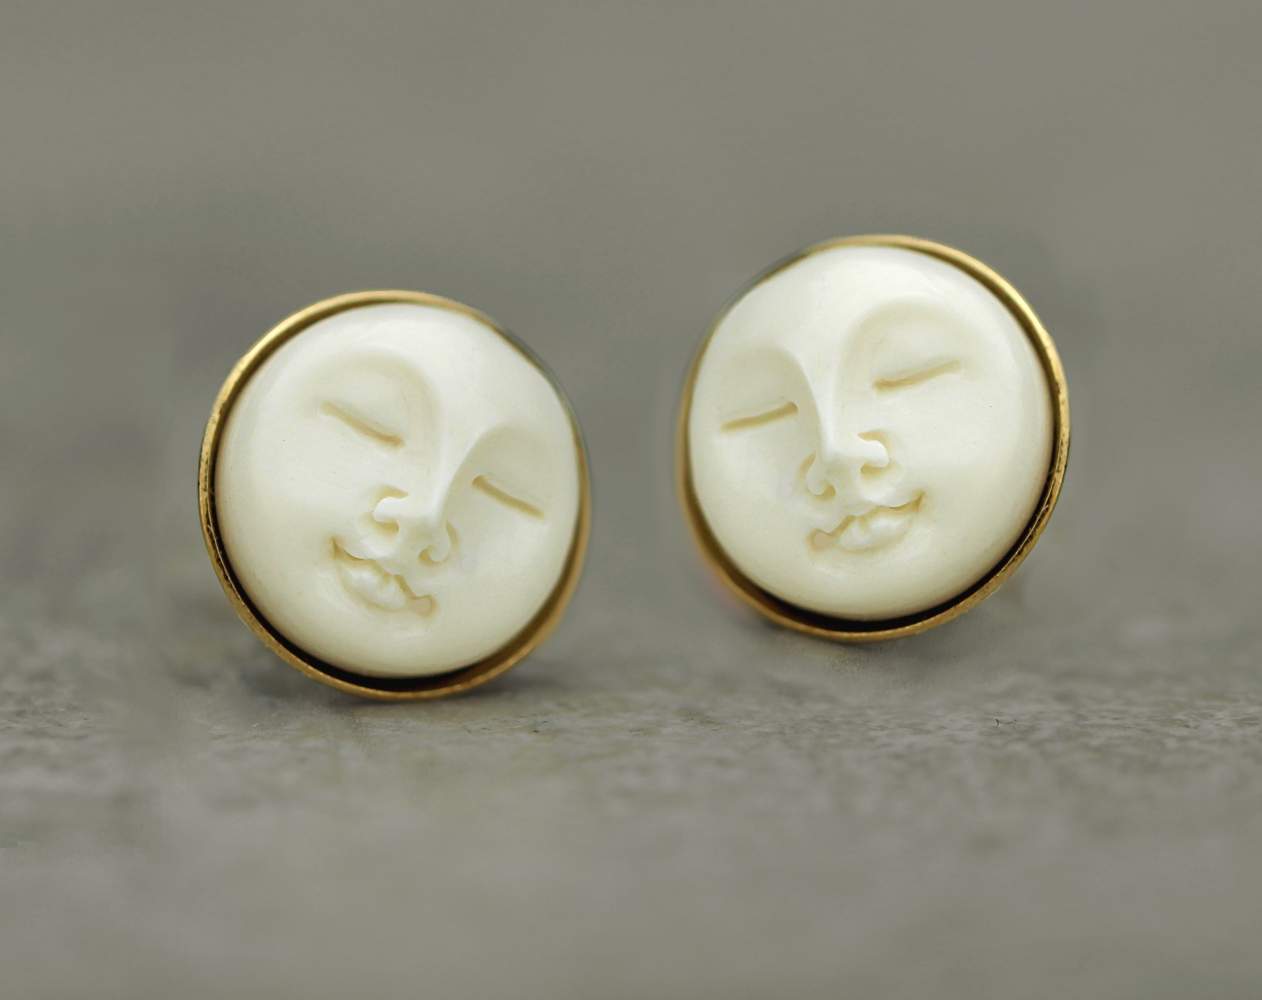 Moon Face stud earrings. Hand casted full moon in vermeil gold setting. Eco friendly white resin. Vegan